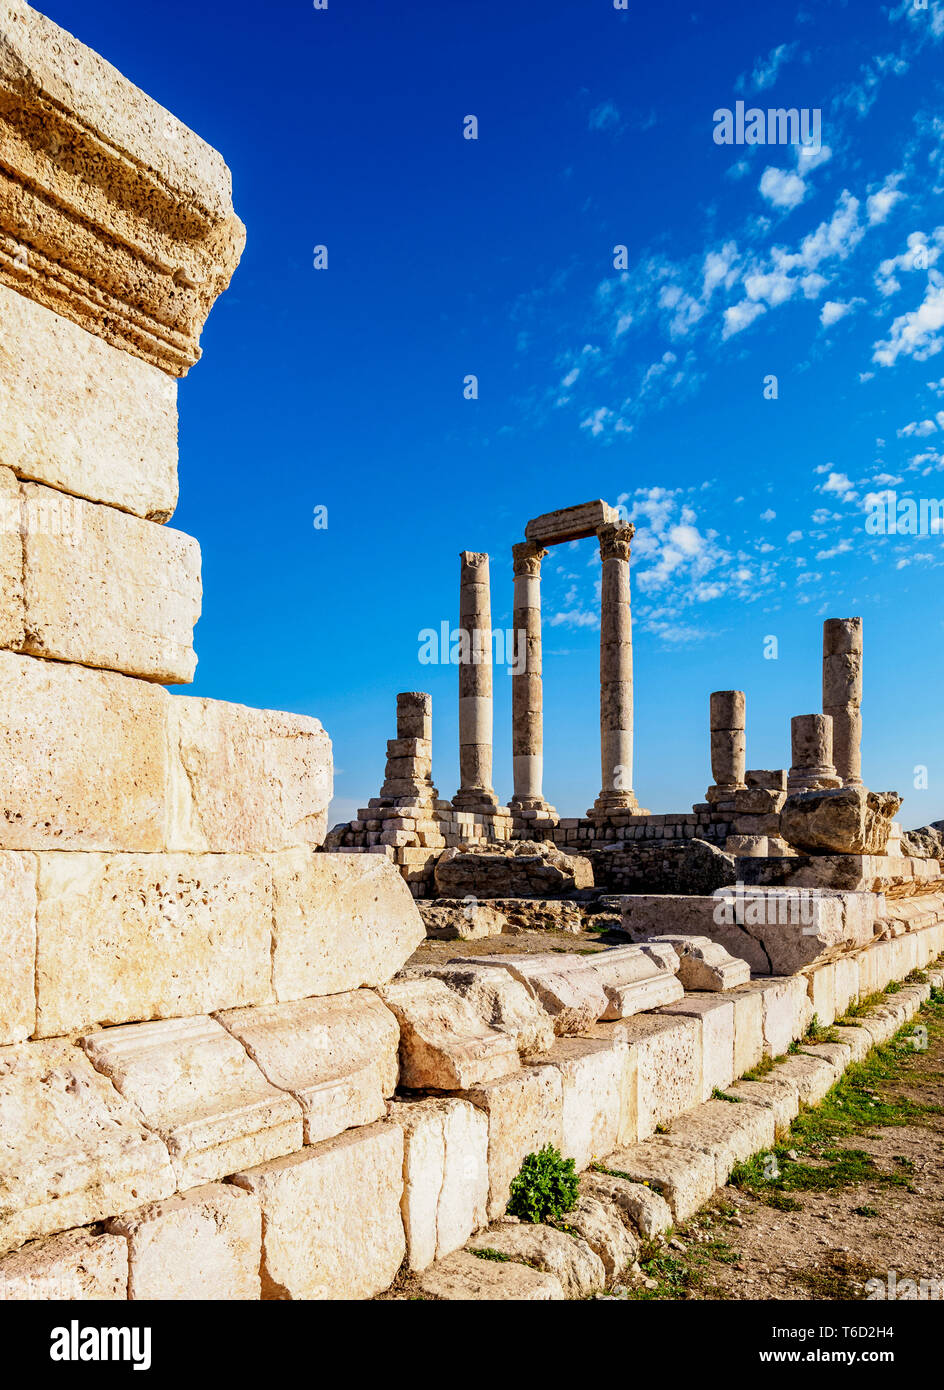 Temple of Hercules Ruins, Amman Citadel, Amman Governorate, Jordan Stock Photo